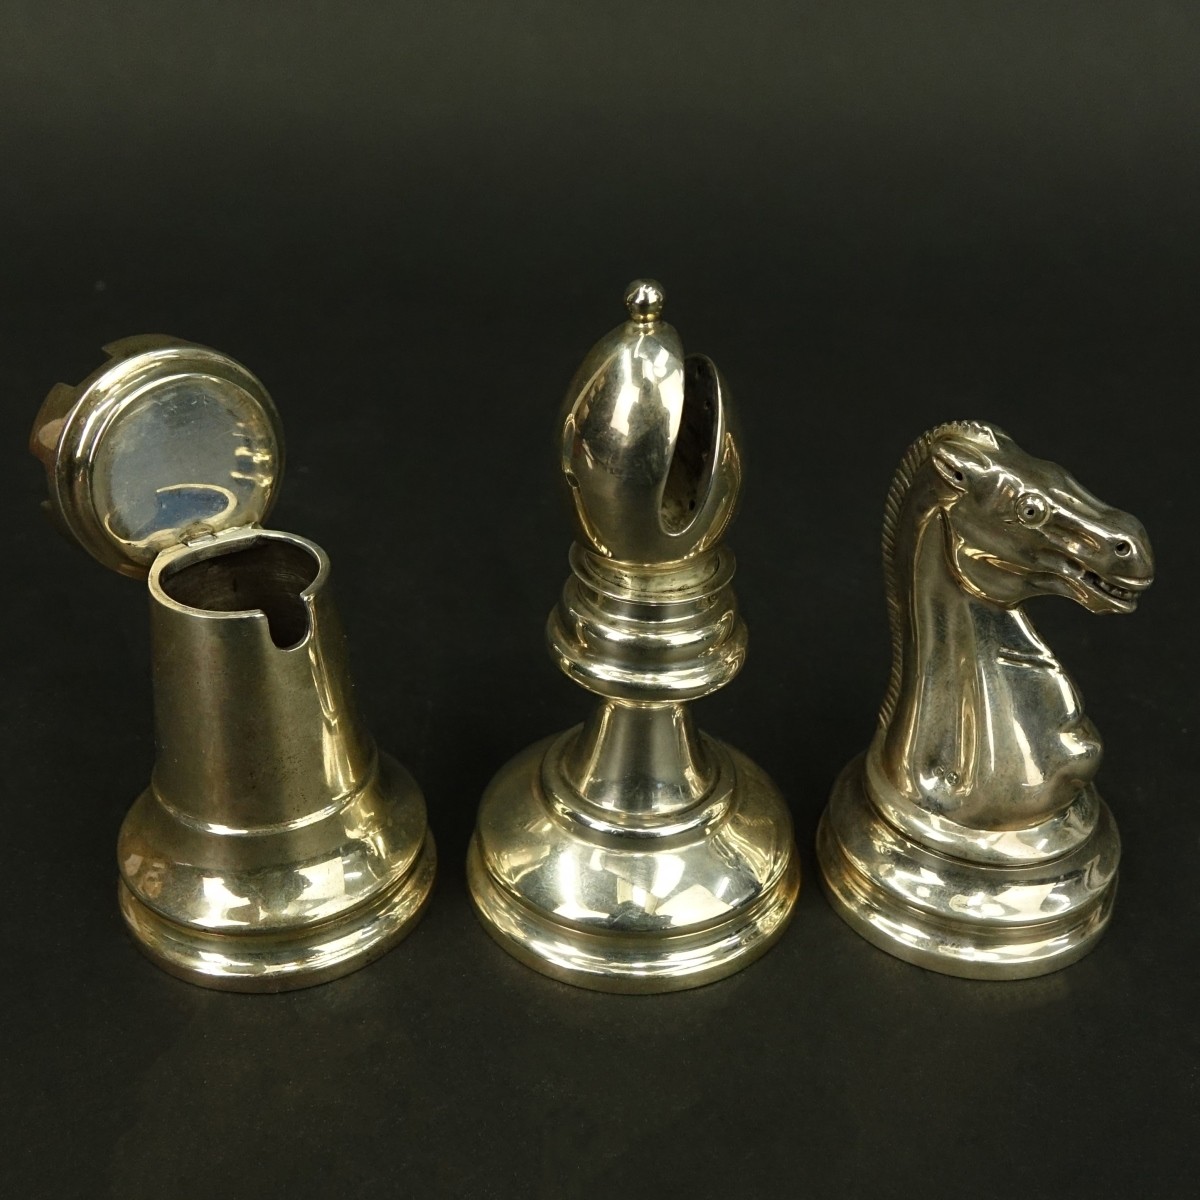 3 Pc Set English Silver "Chess" Salt & Pepper